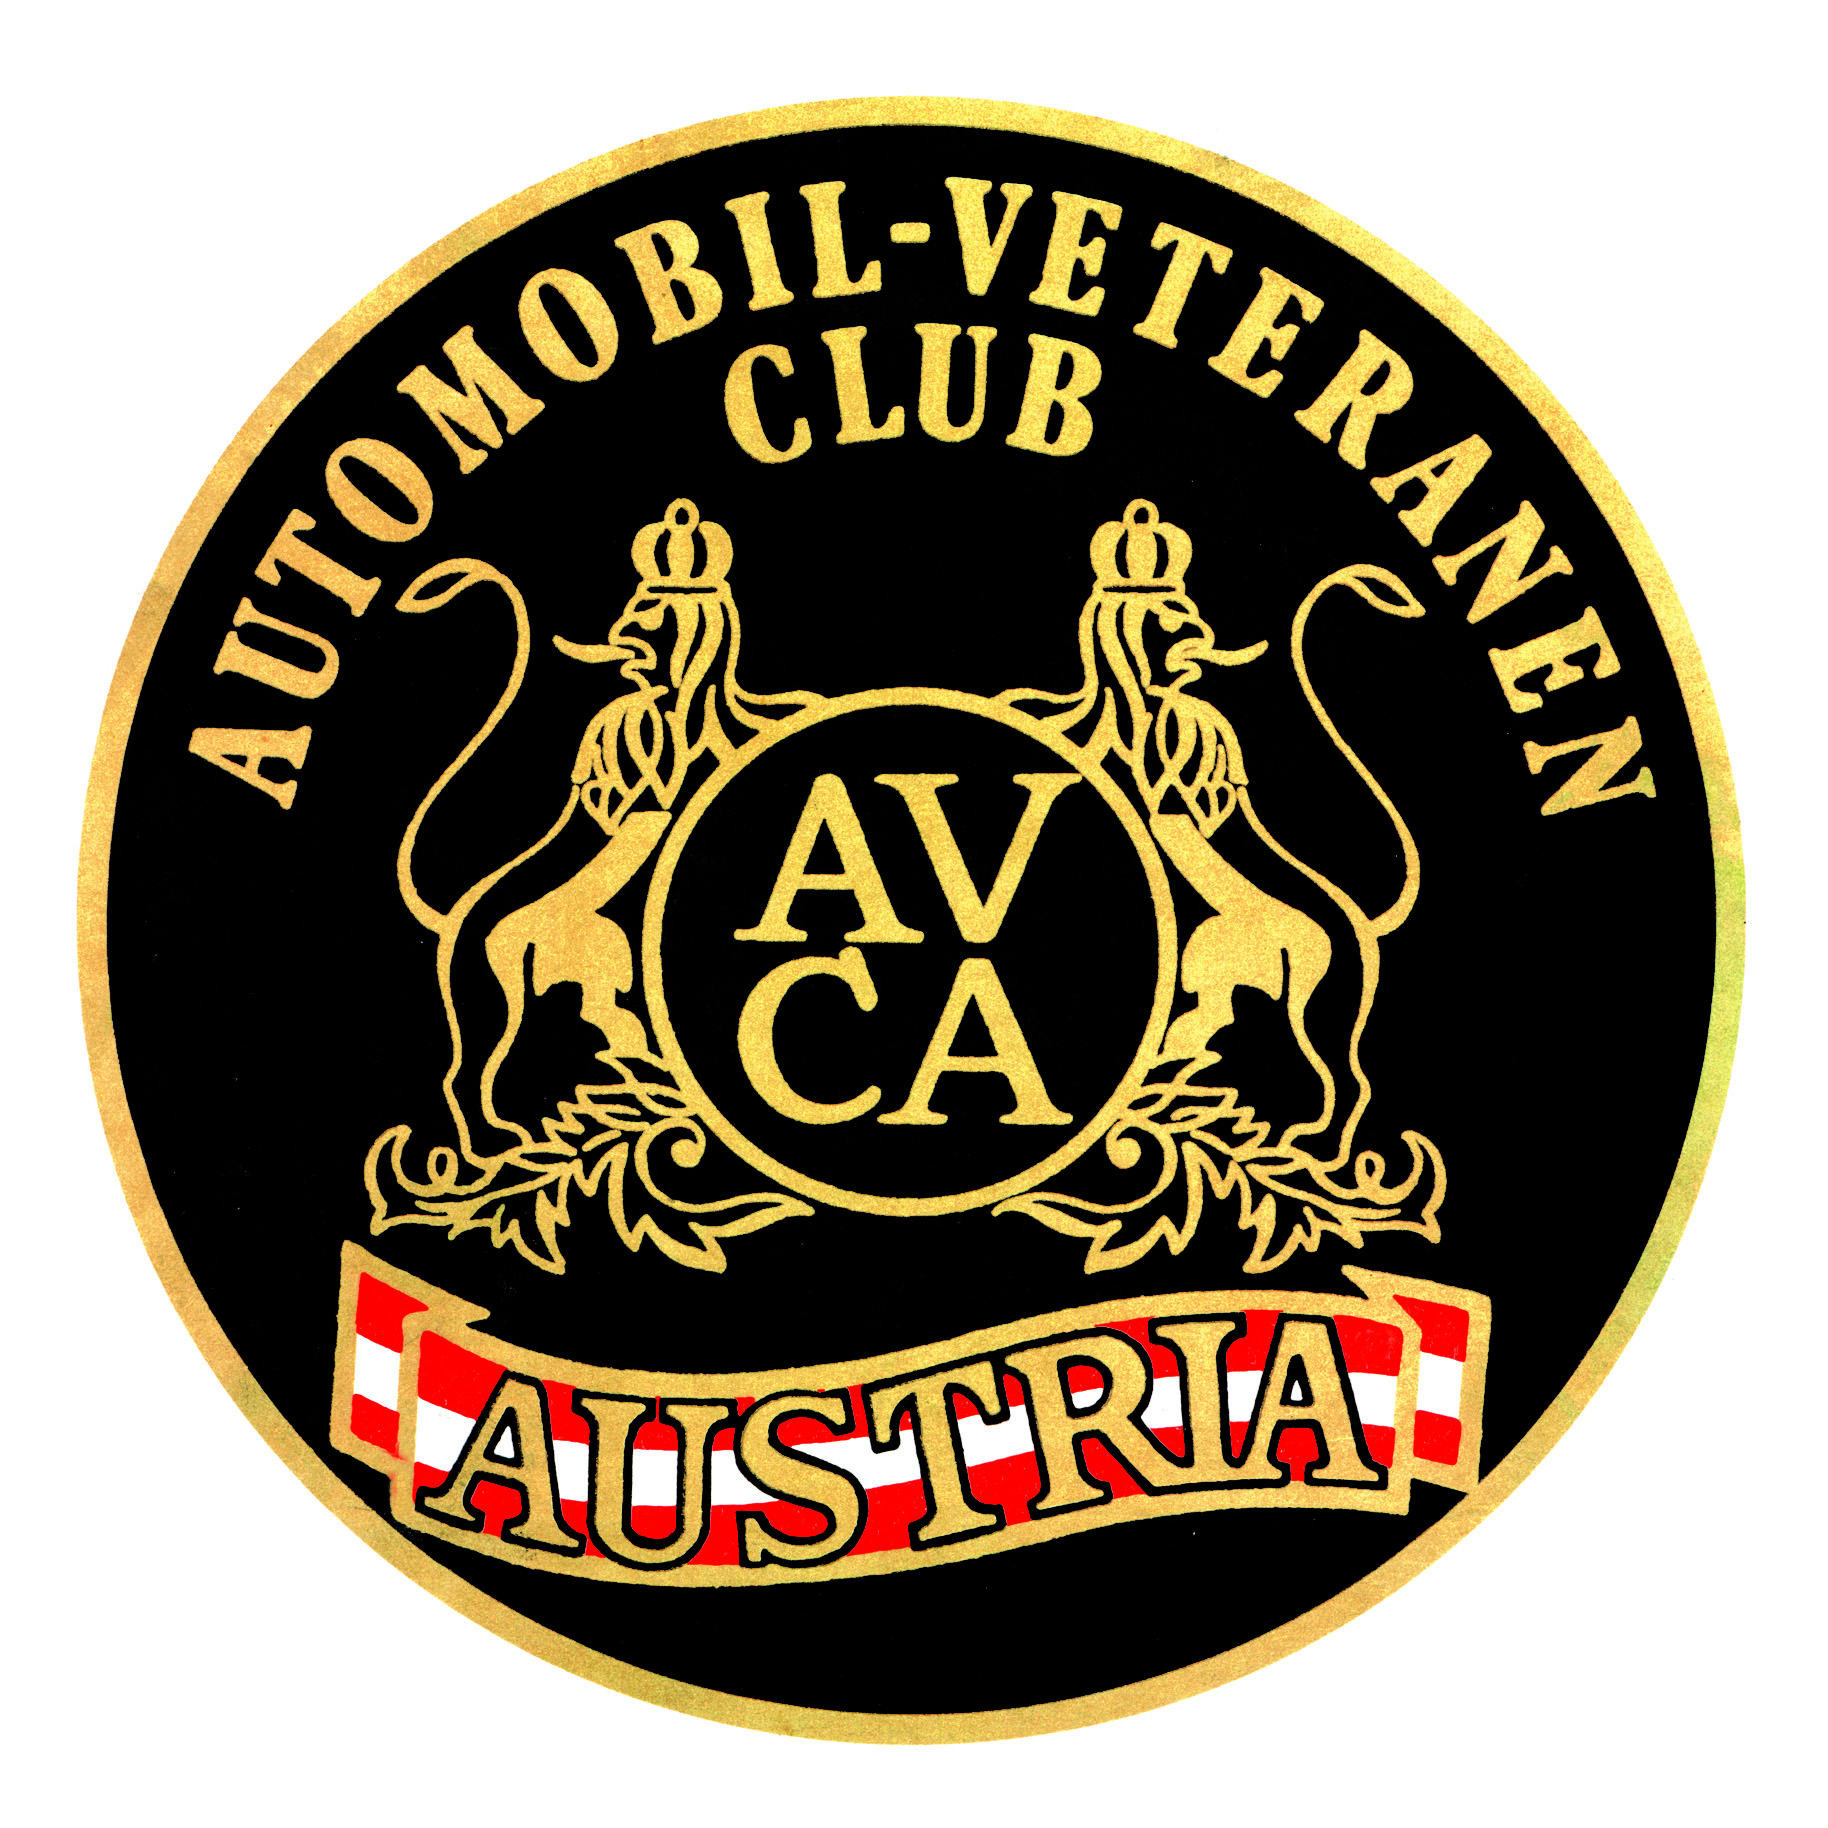 Automobil Veteranen Club Austria	